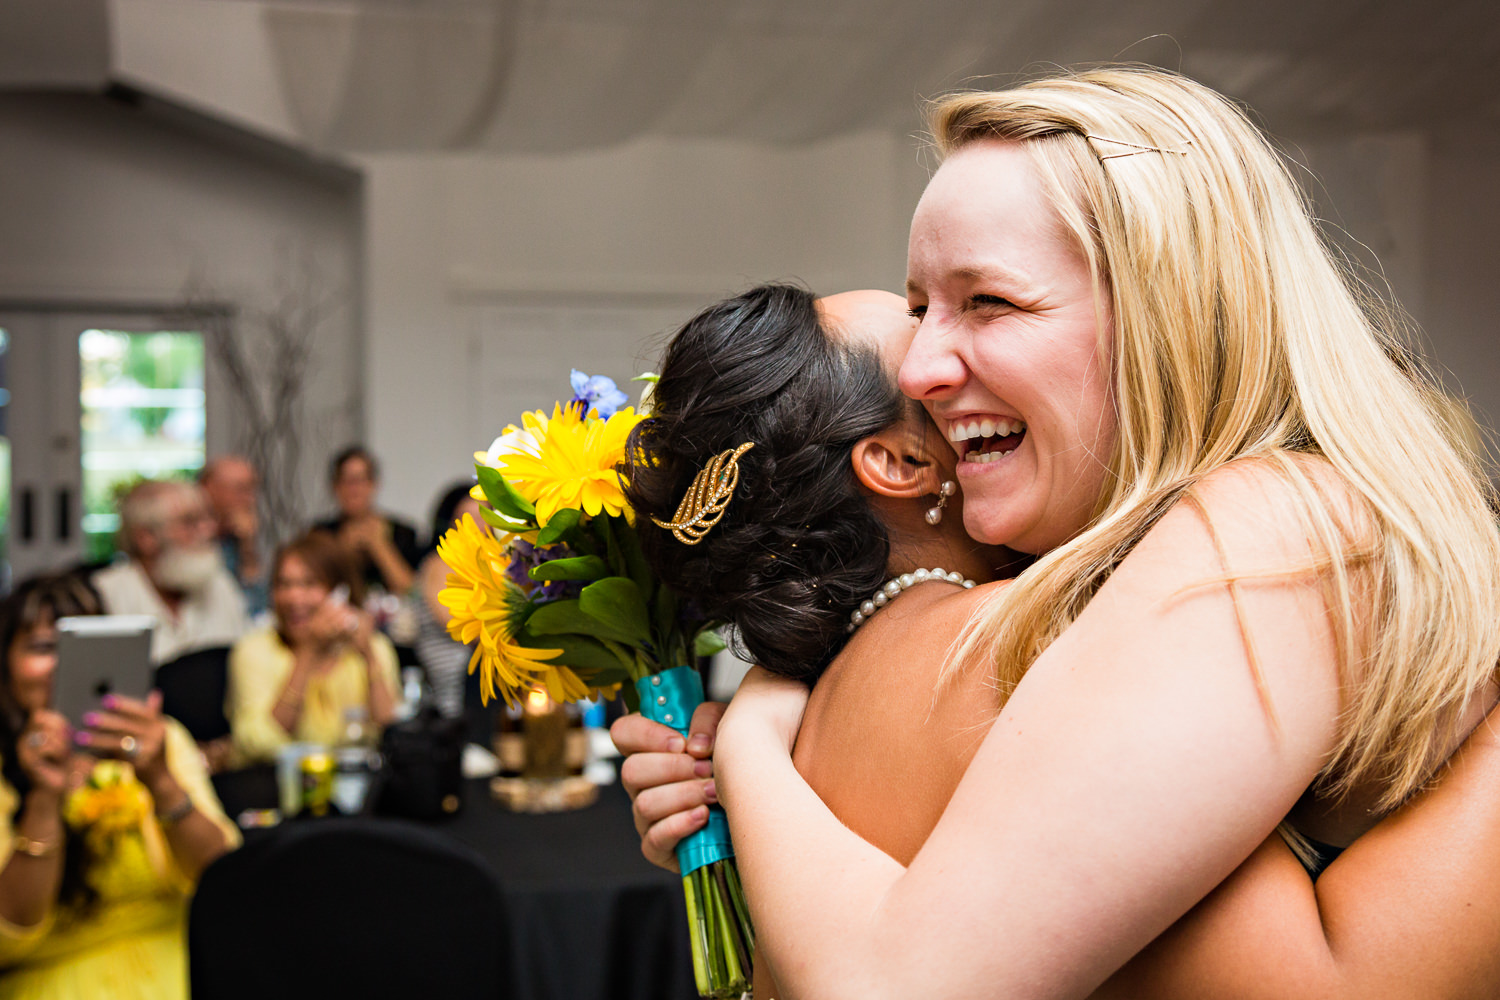 billings-montana-chanceys-wedding-reception-bride-hugs-bouquet-catcher.jpg